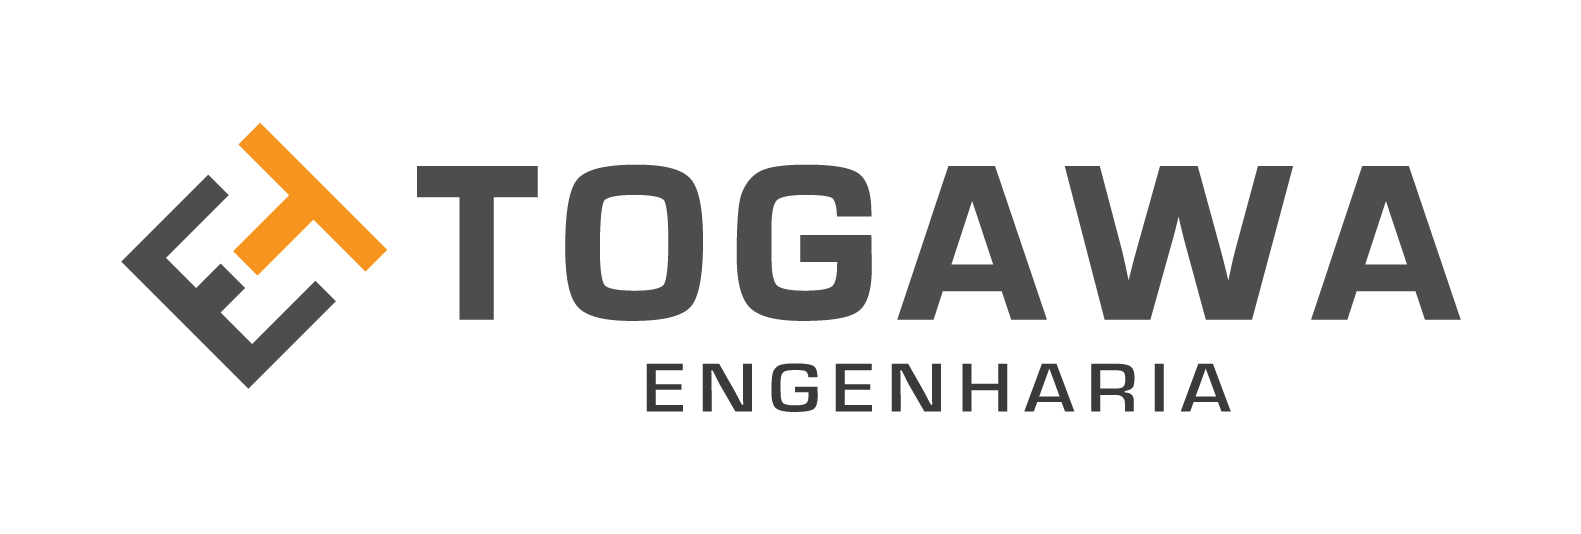 Togawa Engenharia